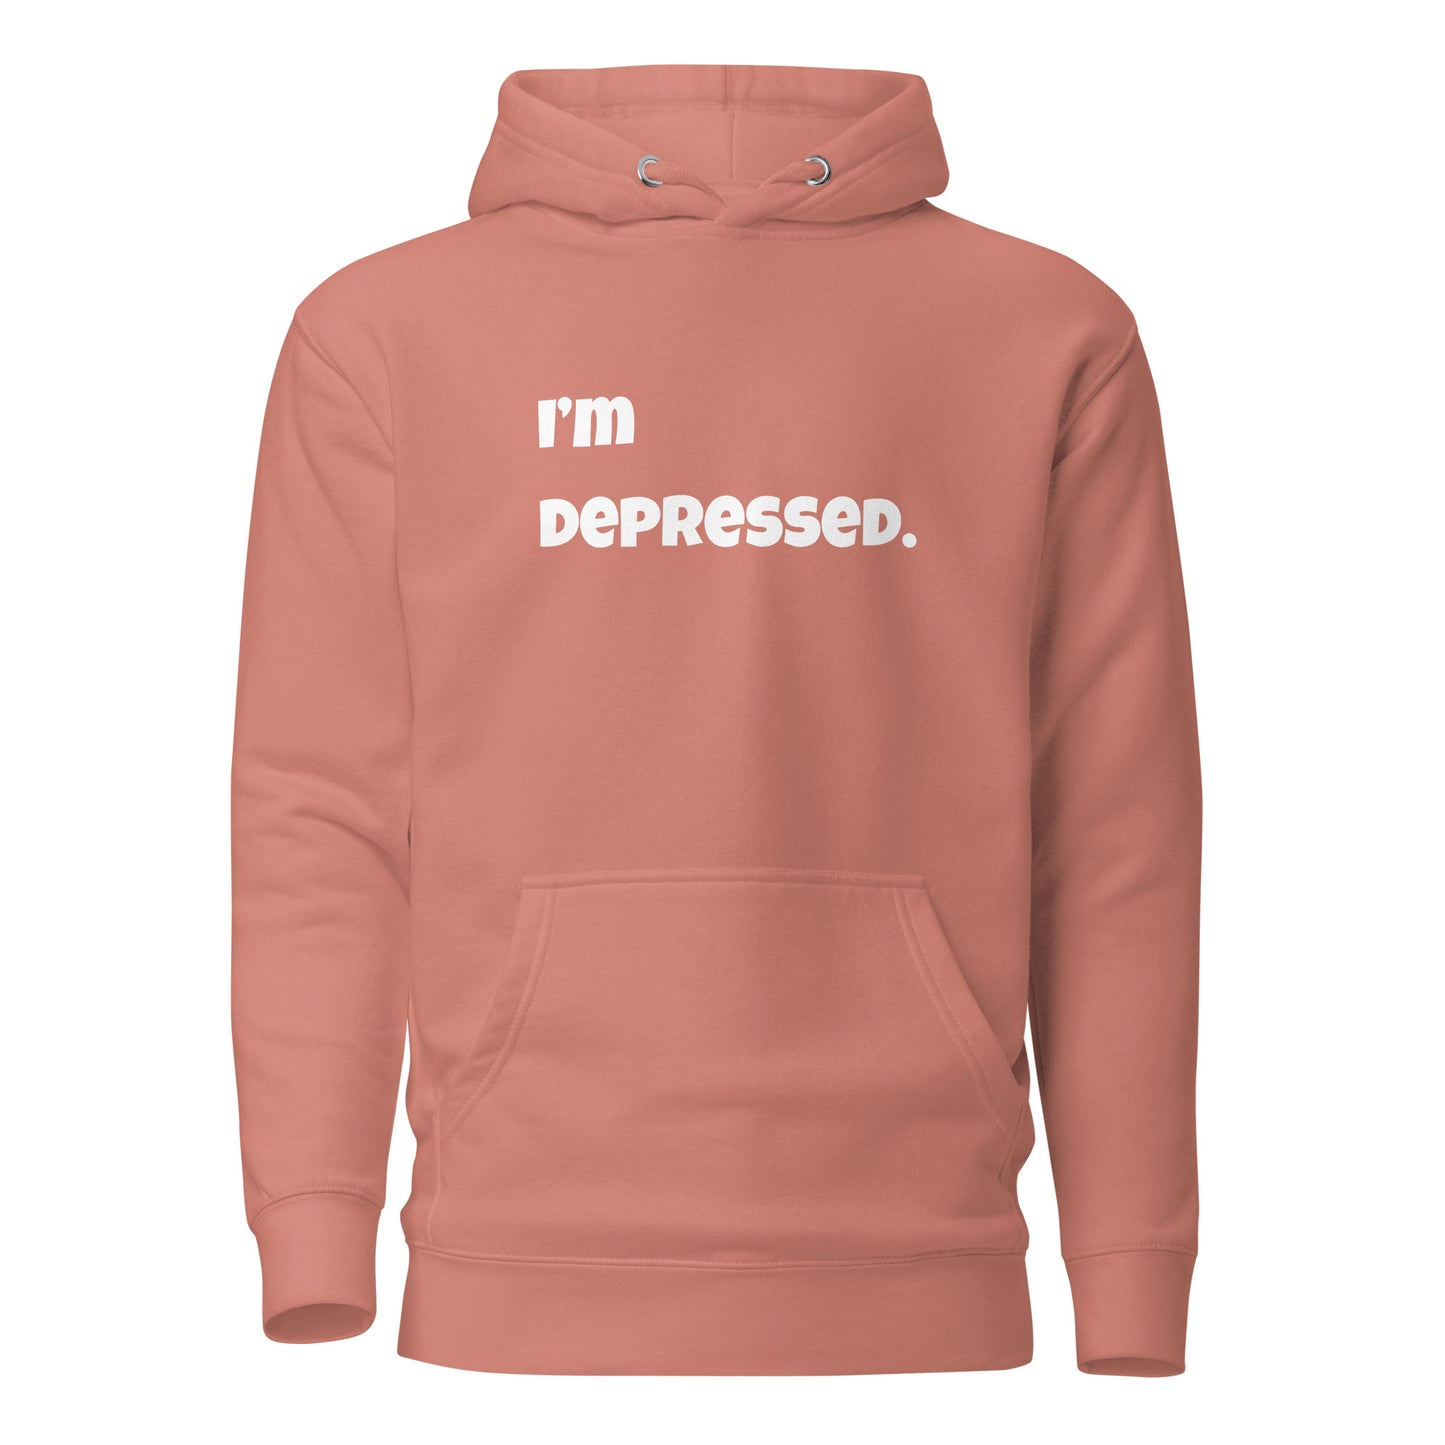 "I'm Depressed" Hoodie